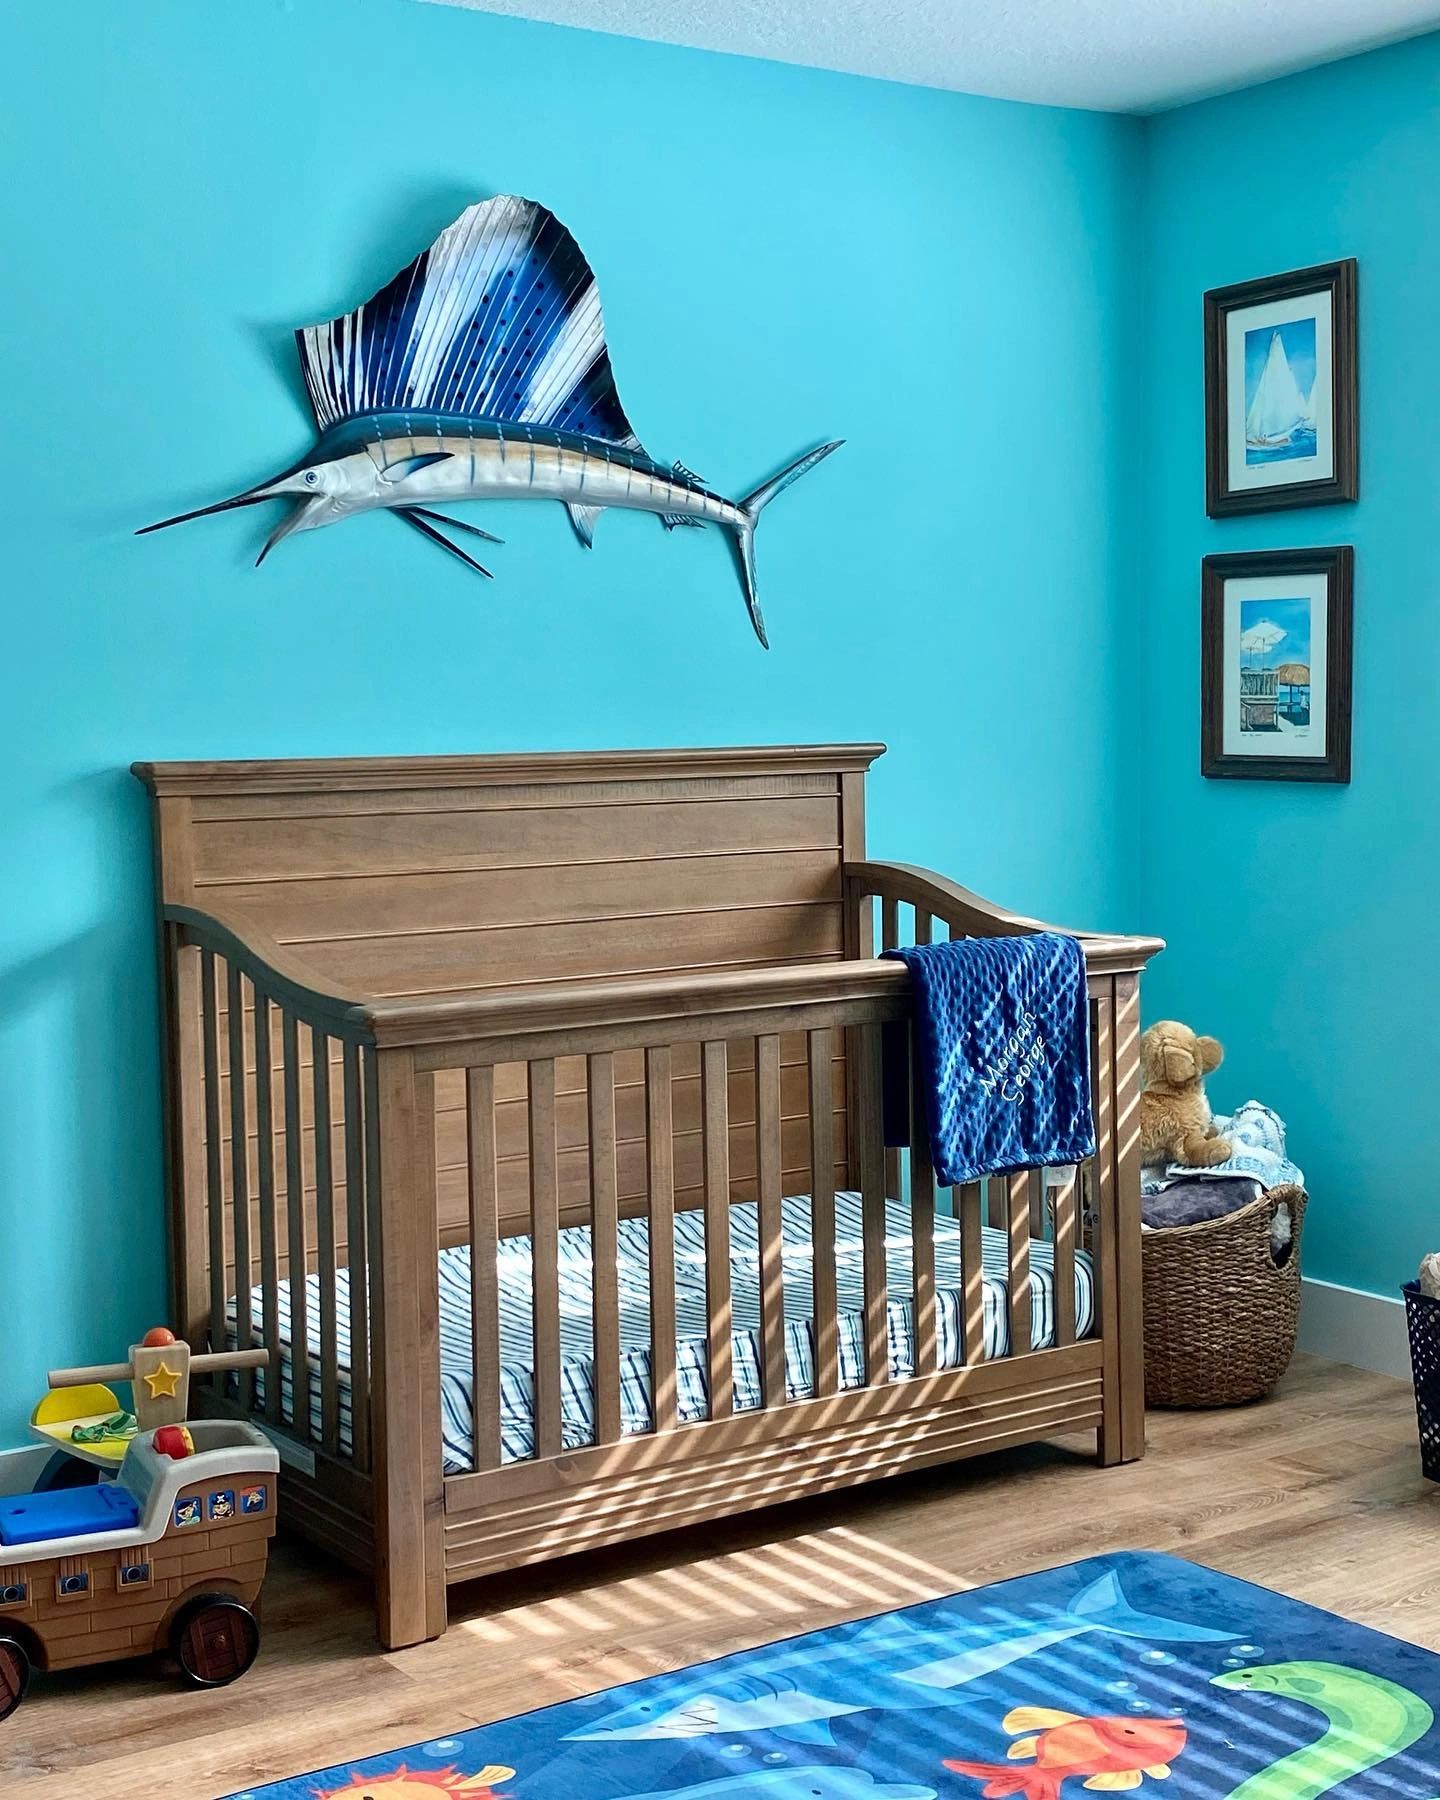 Florida baby boy nursery sailfish over bed taxidermy interior design